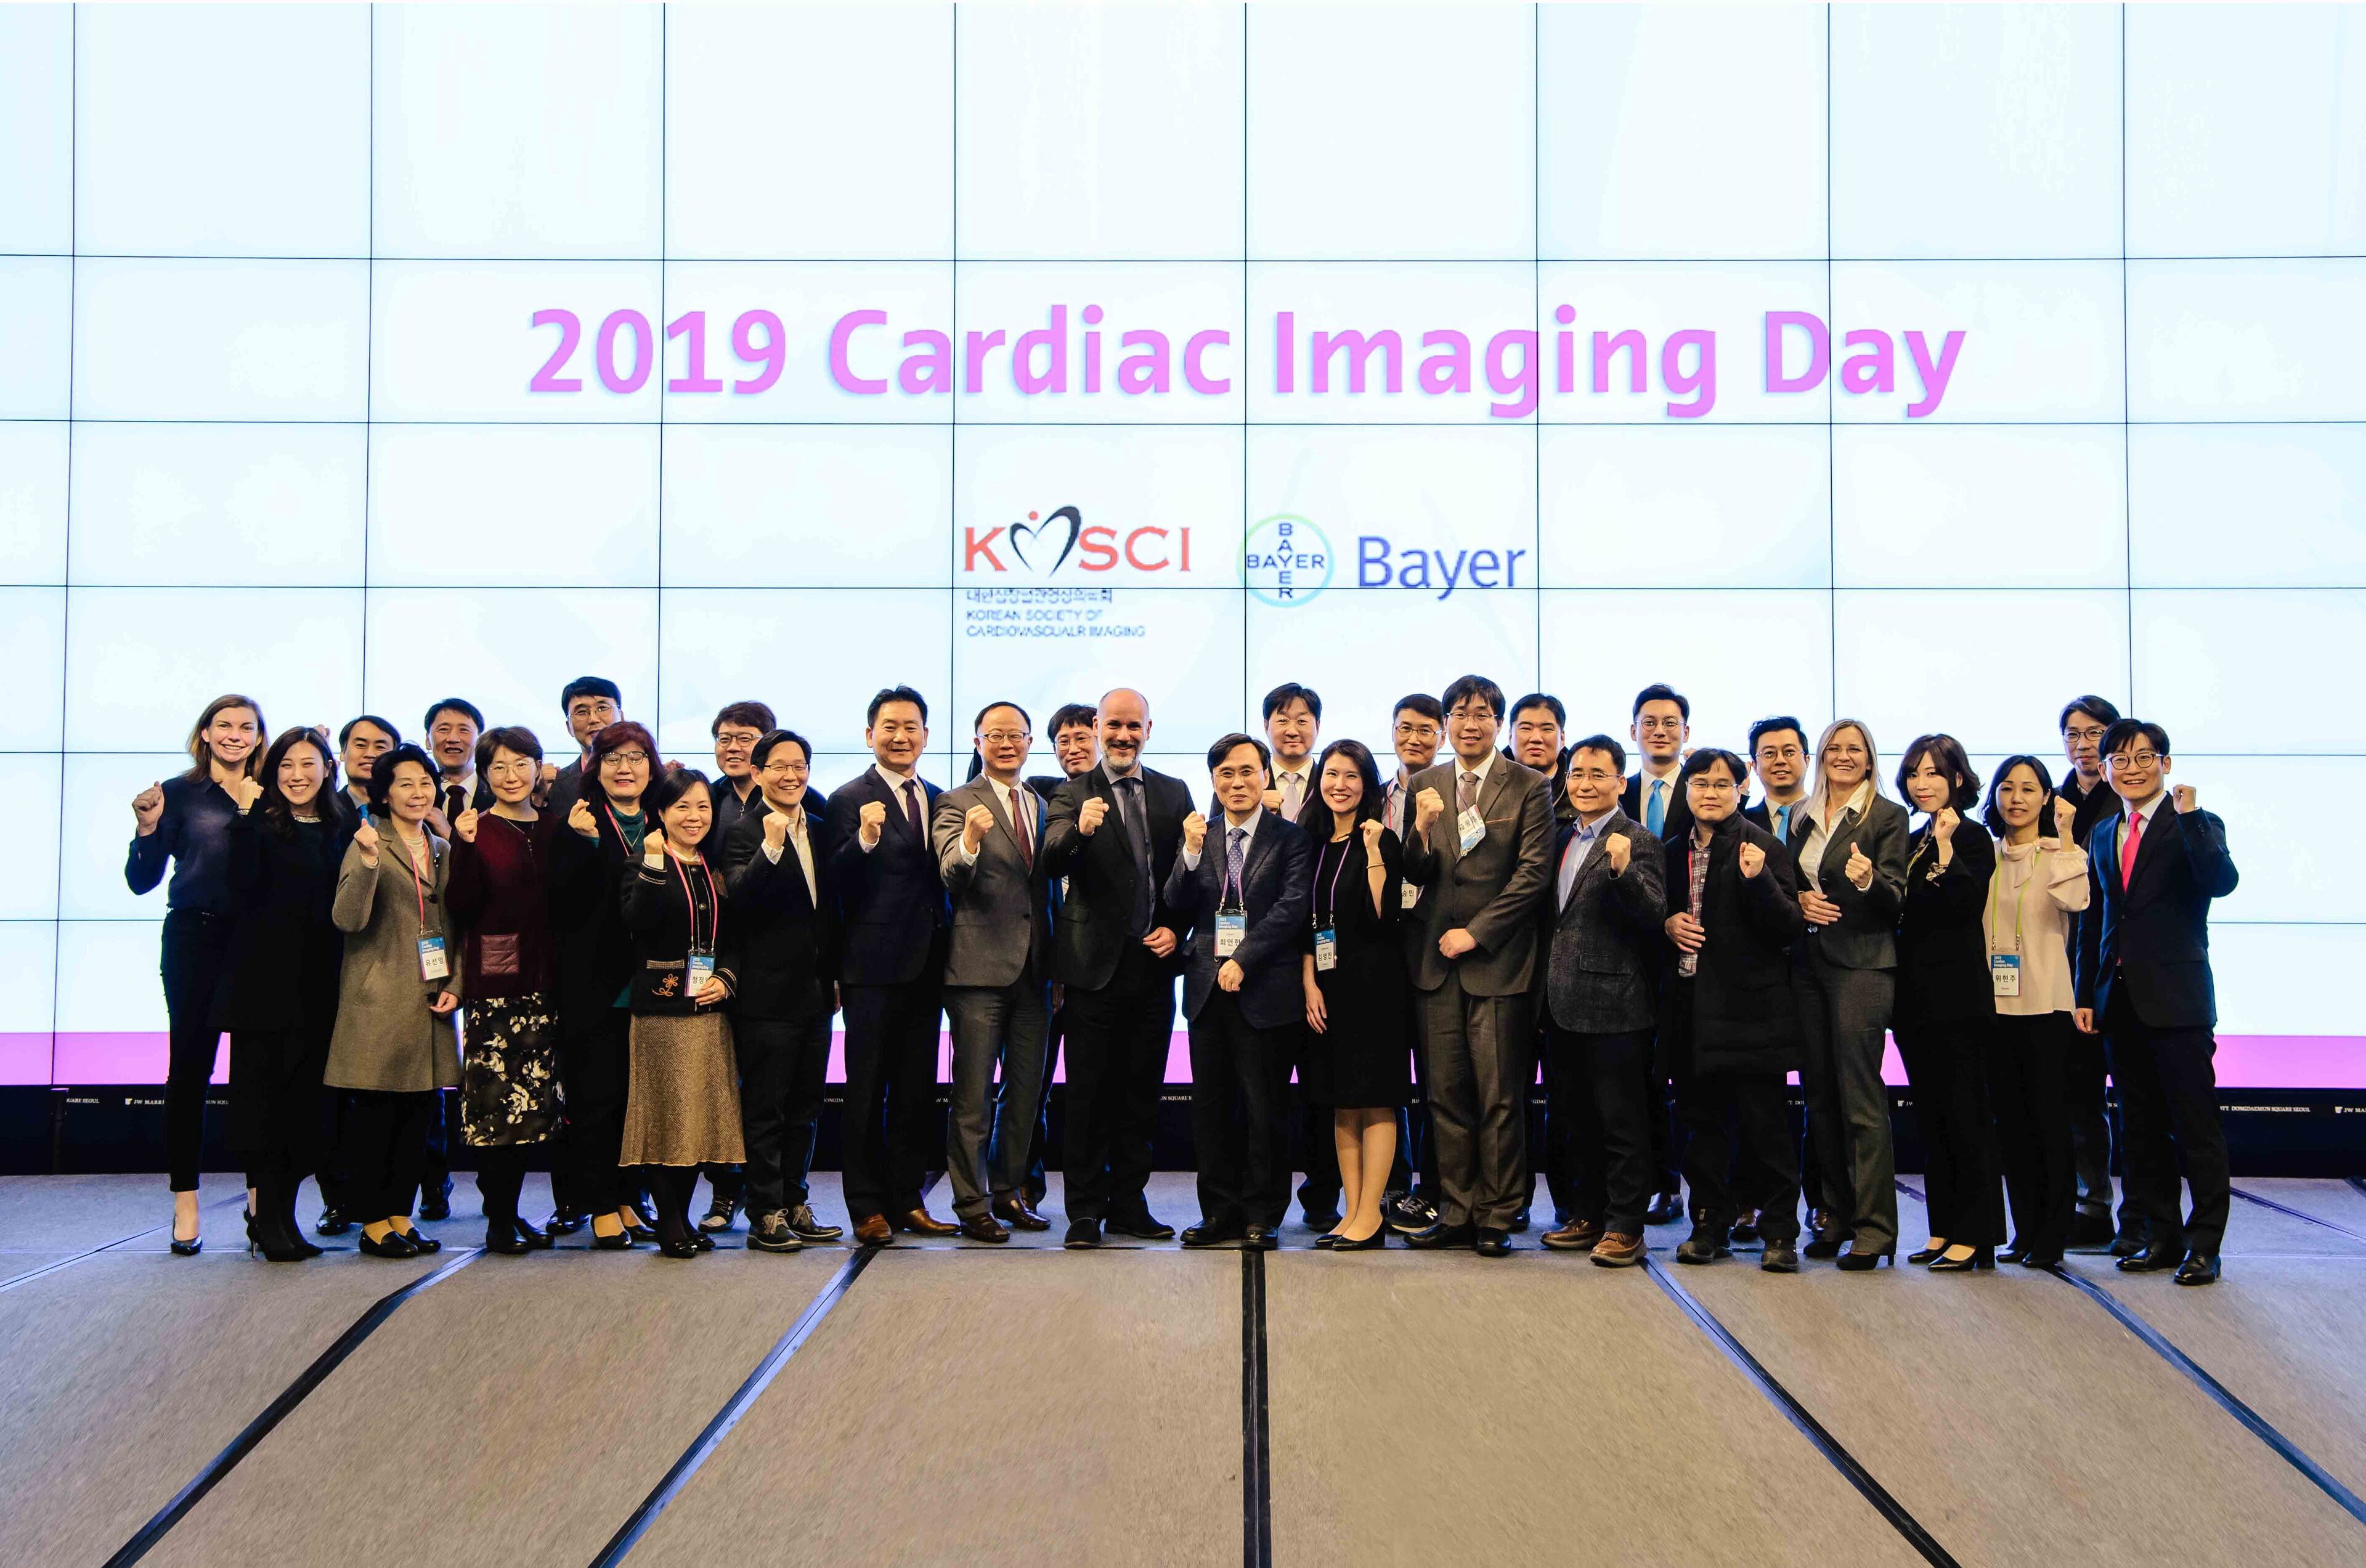 Cardiac Imaging Day